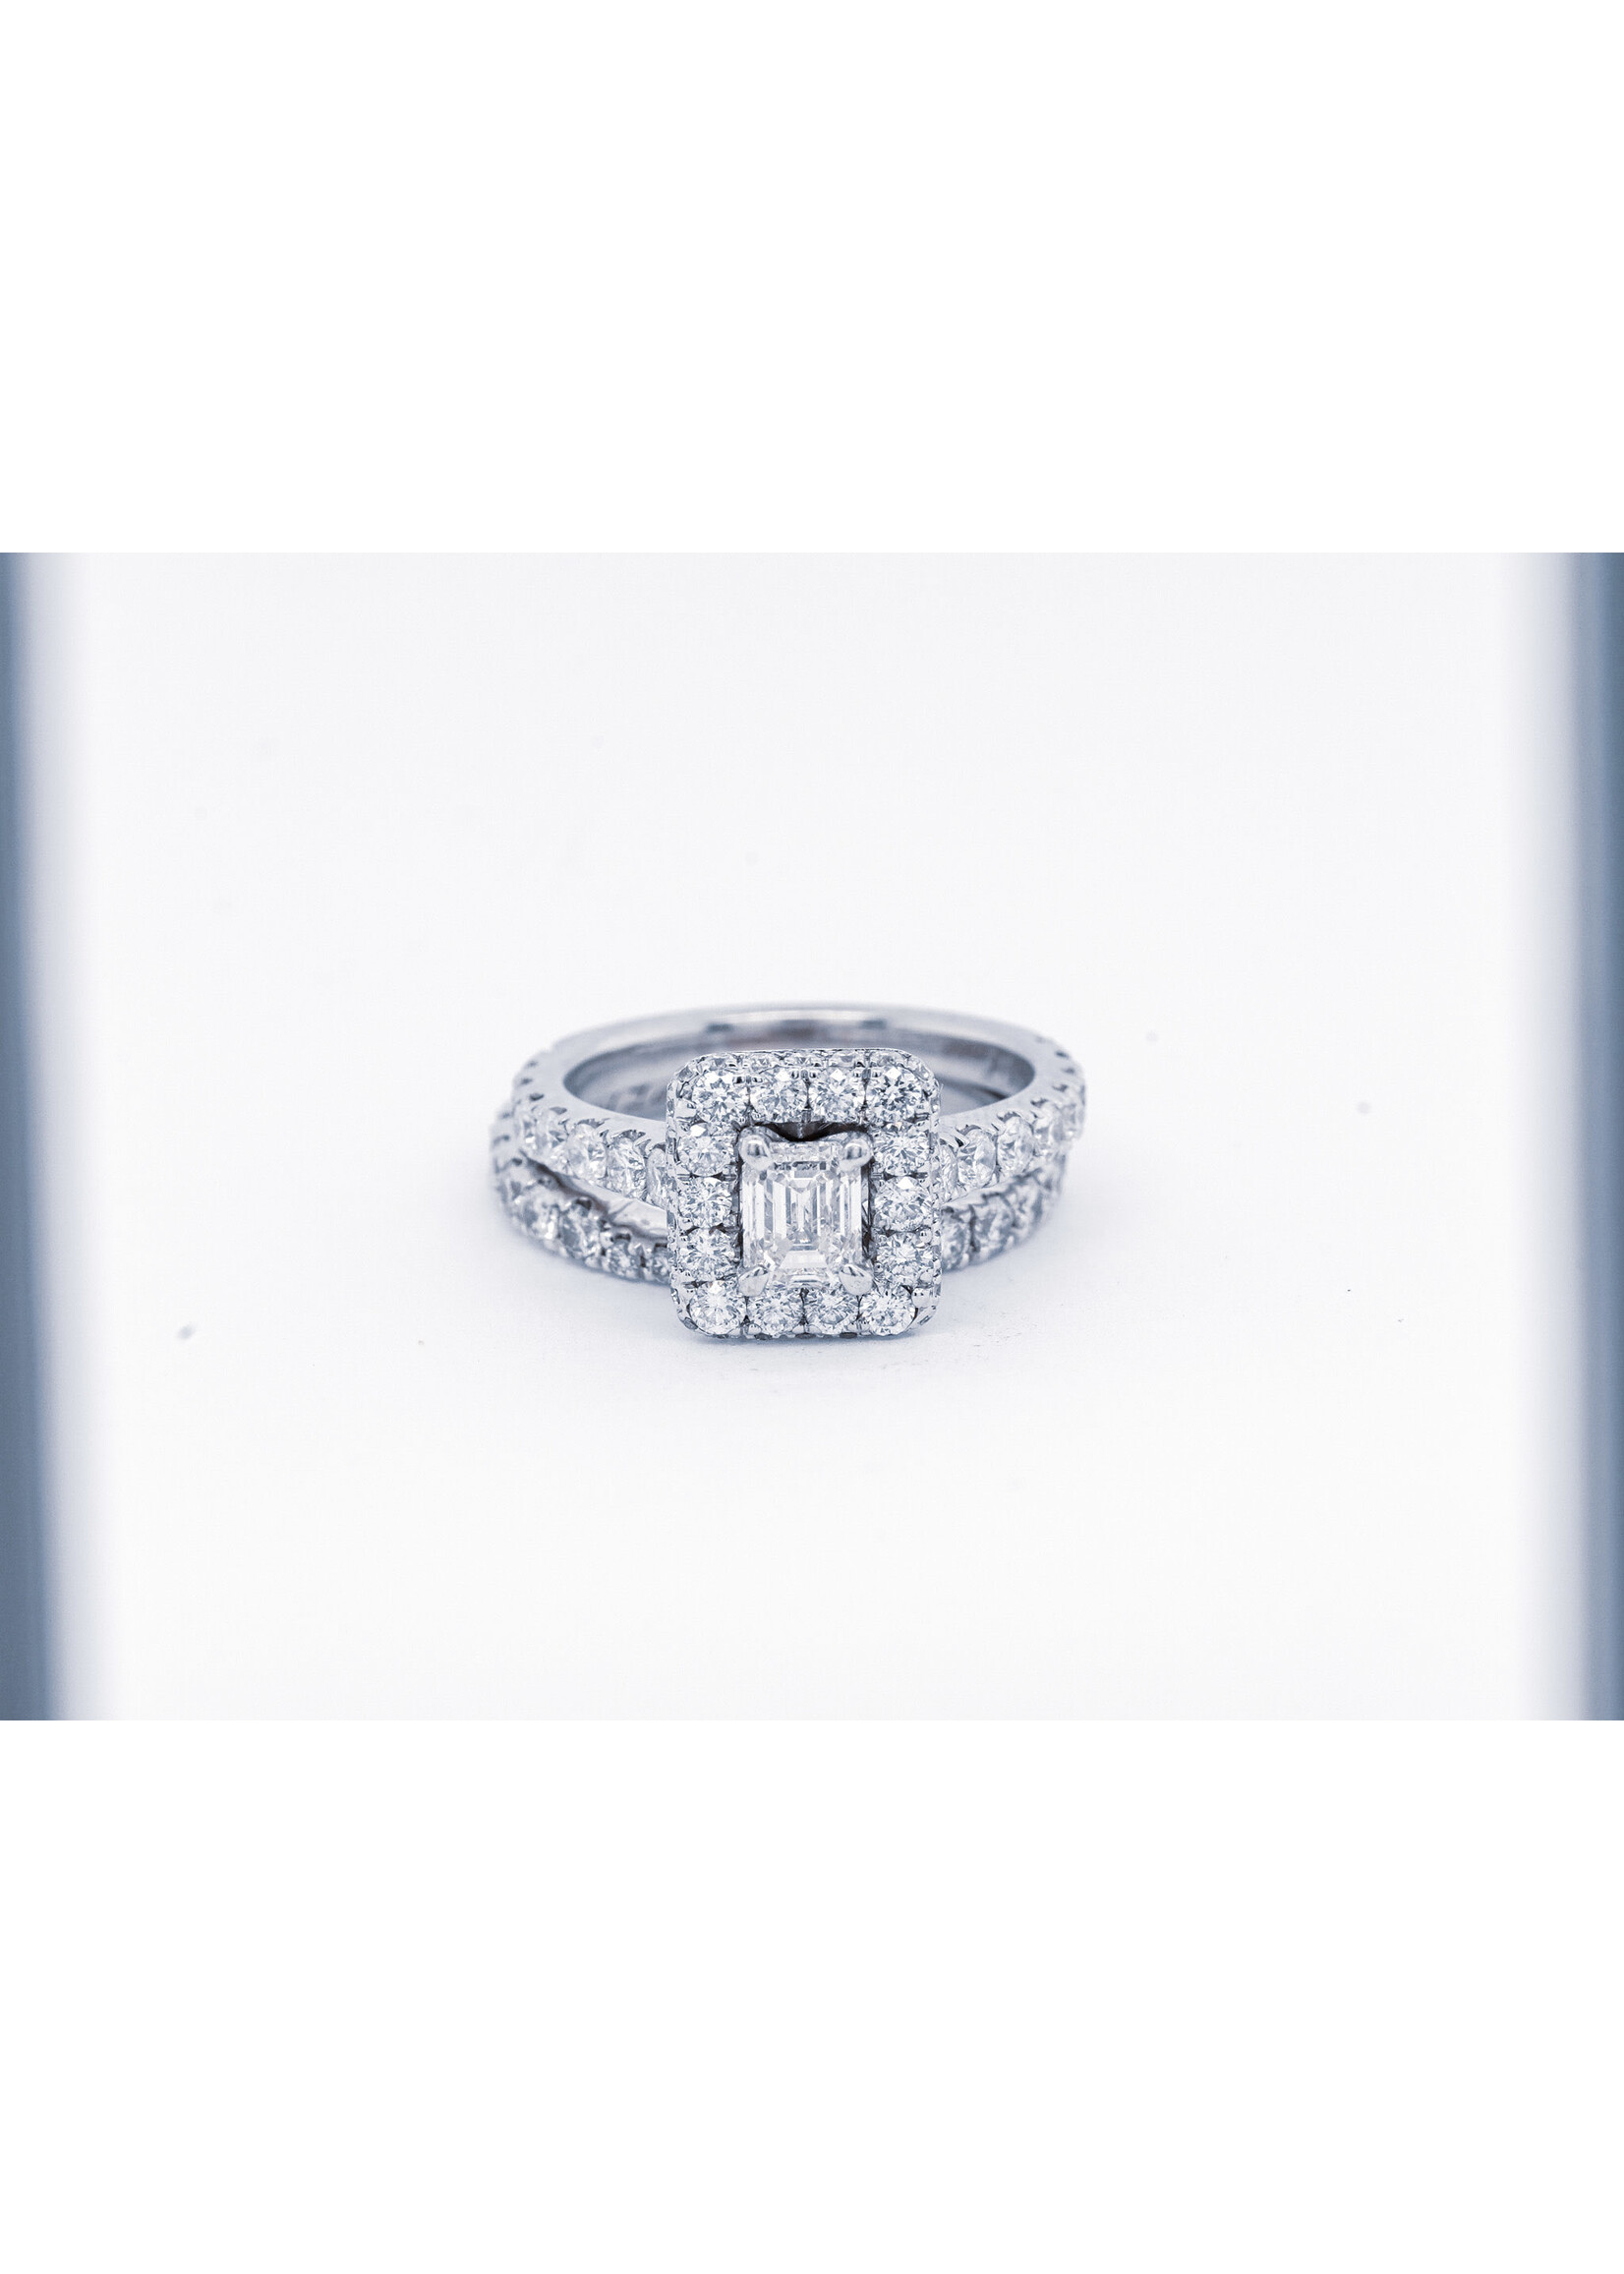 14KW 6.34g 1.50TW (.50ctr) G/SI1 Neil Lane Emerald Cut Diamond Halo Wedding Set (size 4.5)